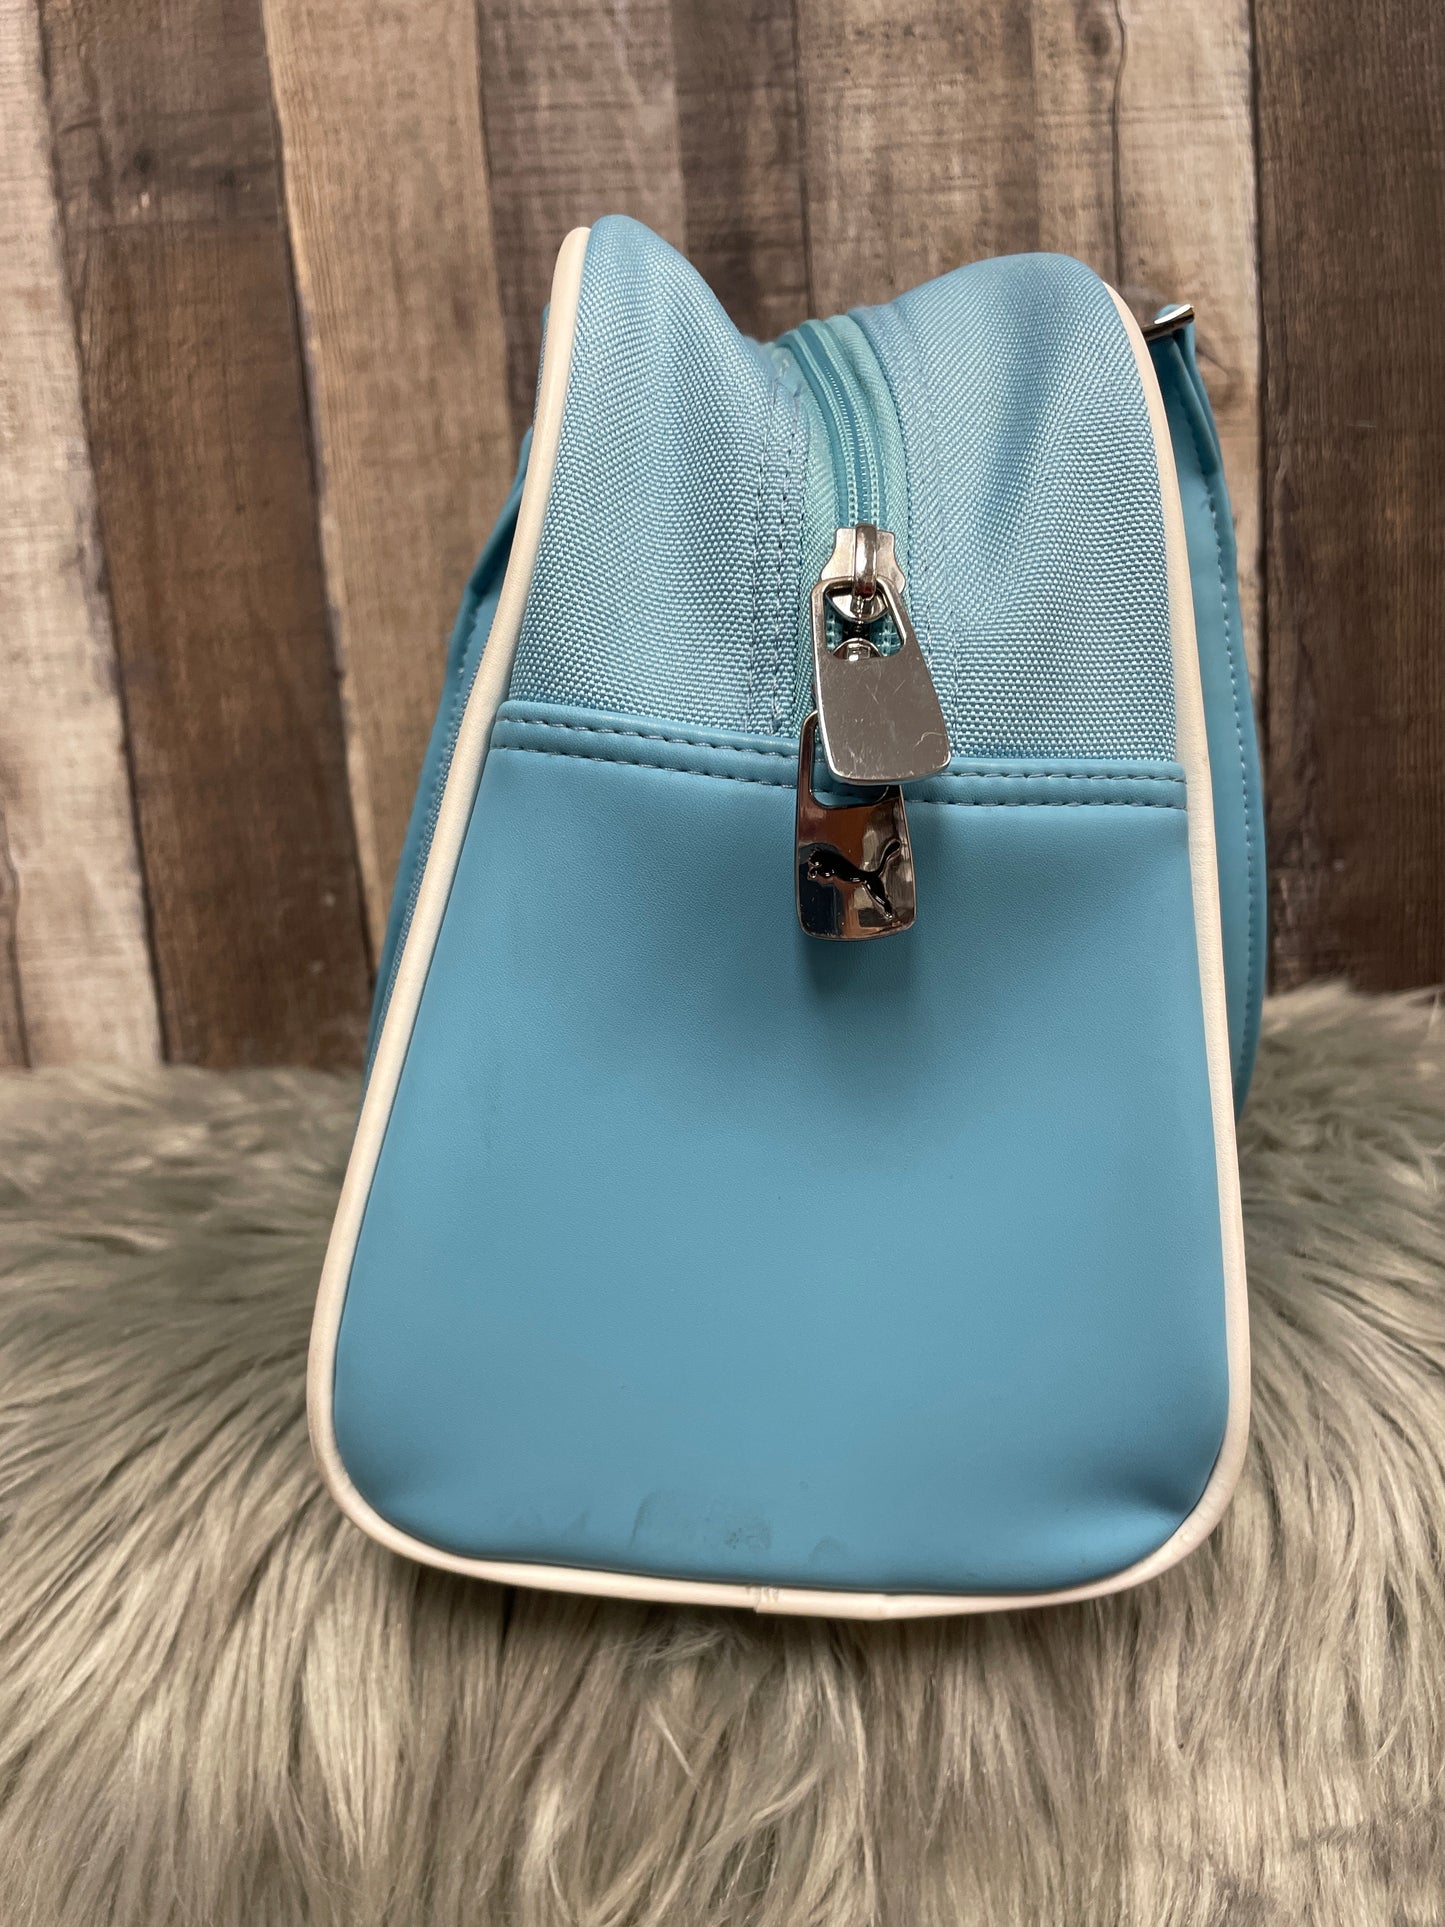 Handbag By Puma  Size: Medium